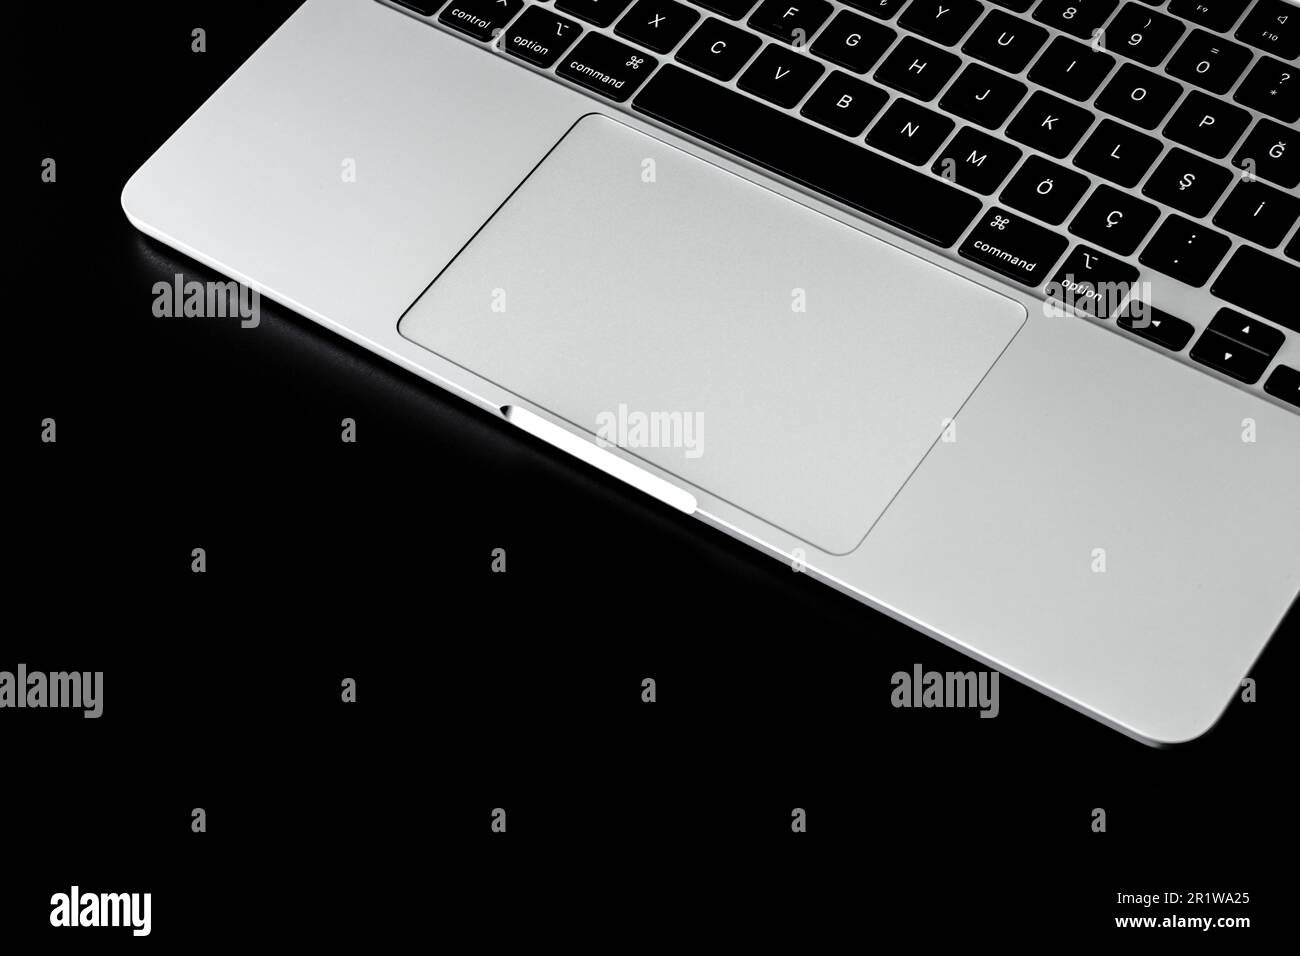 Keyboard and trackpad, grey keyboard on black background Stock Photo